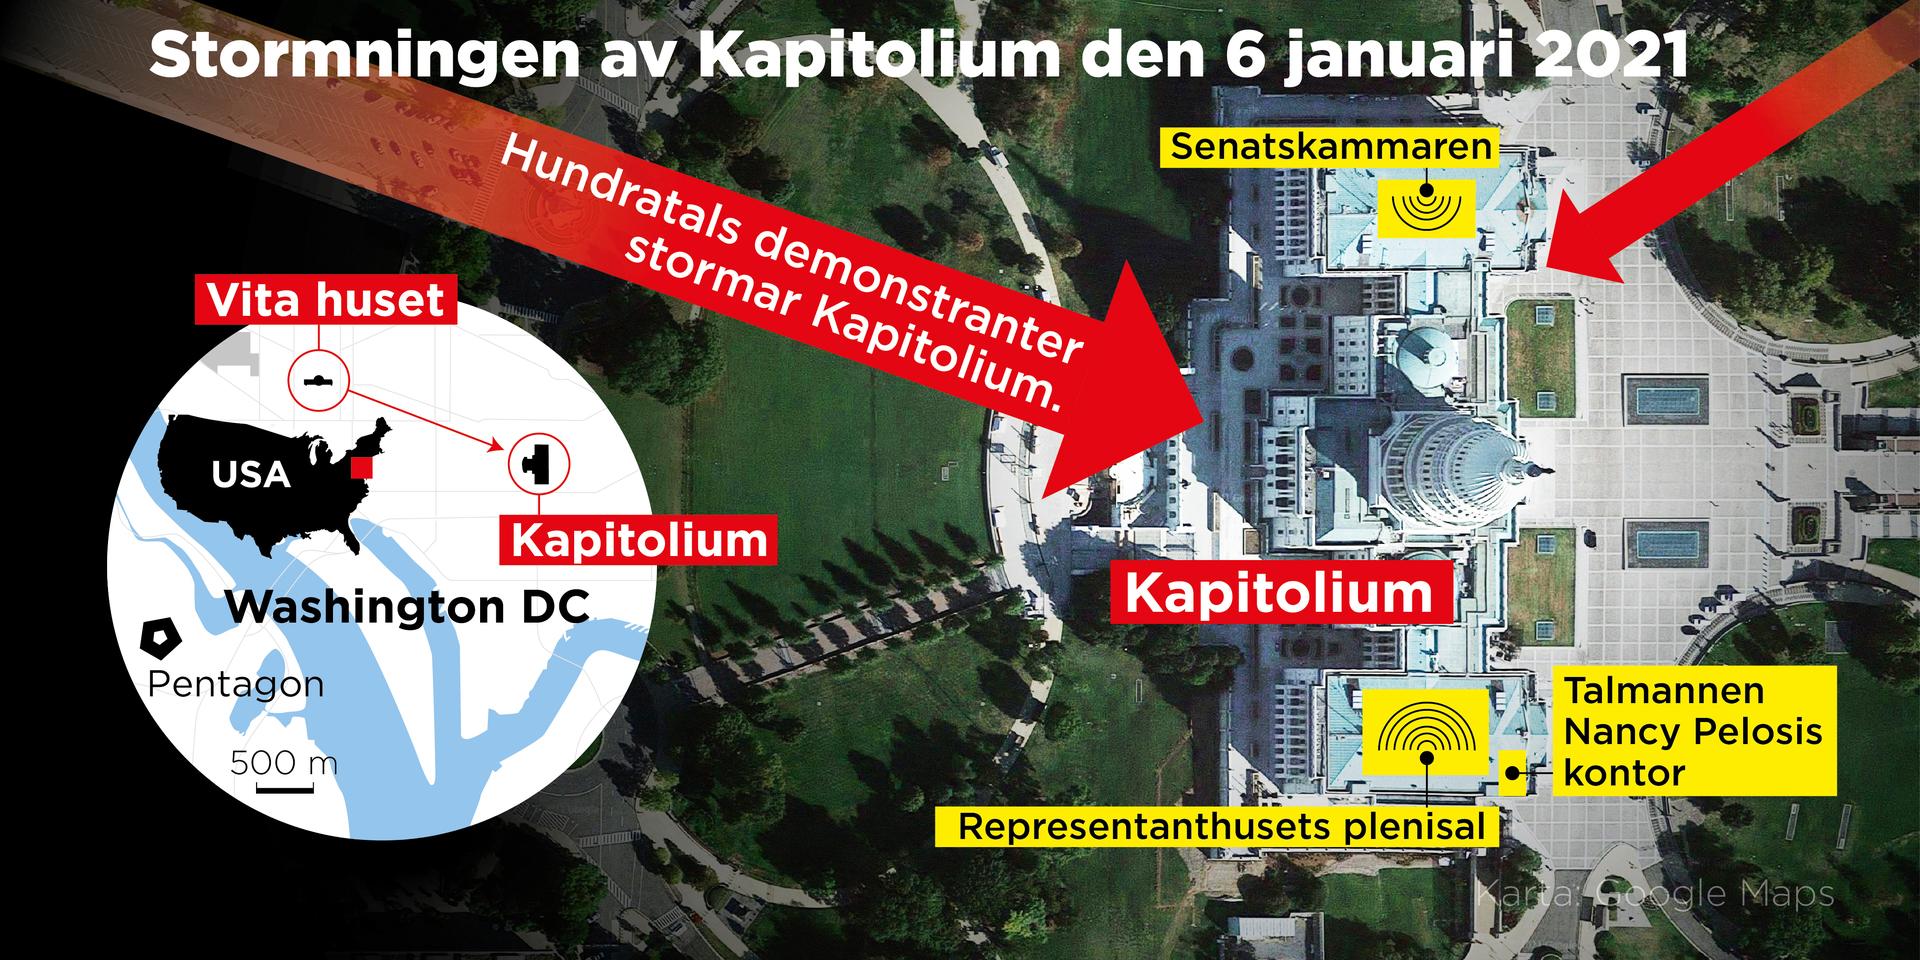 Stormningen av Kapitolium den 6 januari 2021.